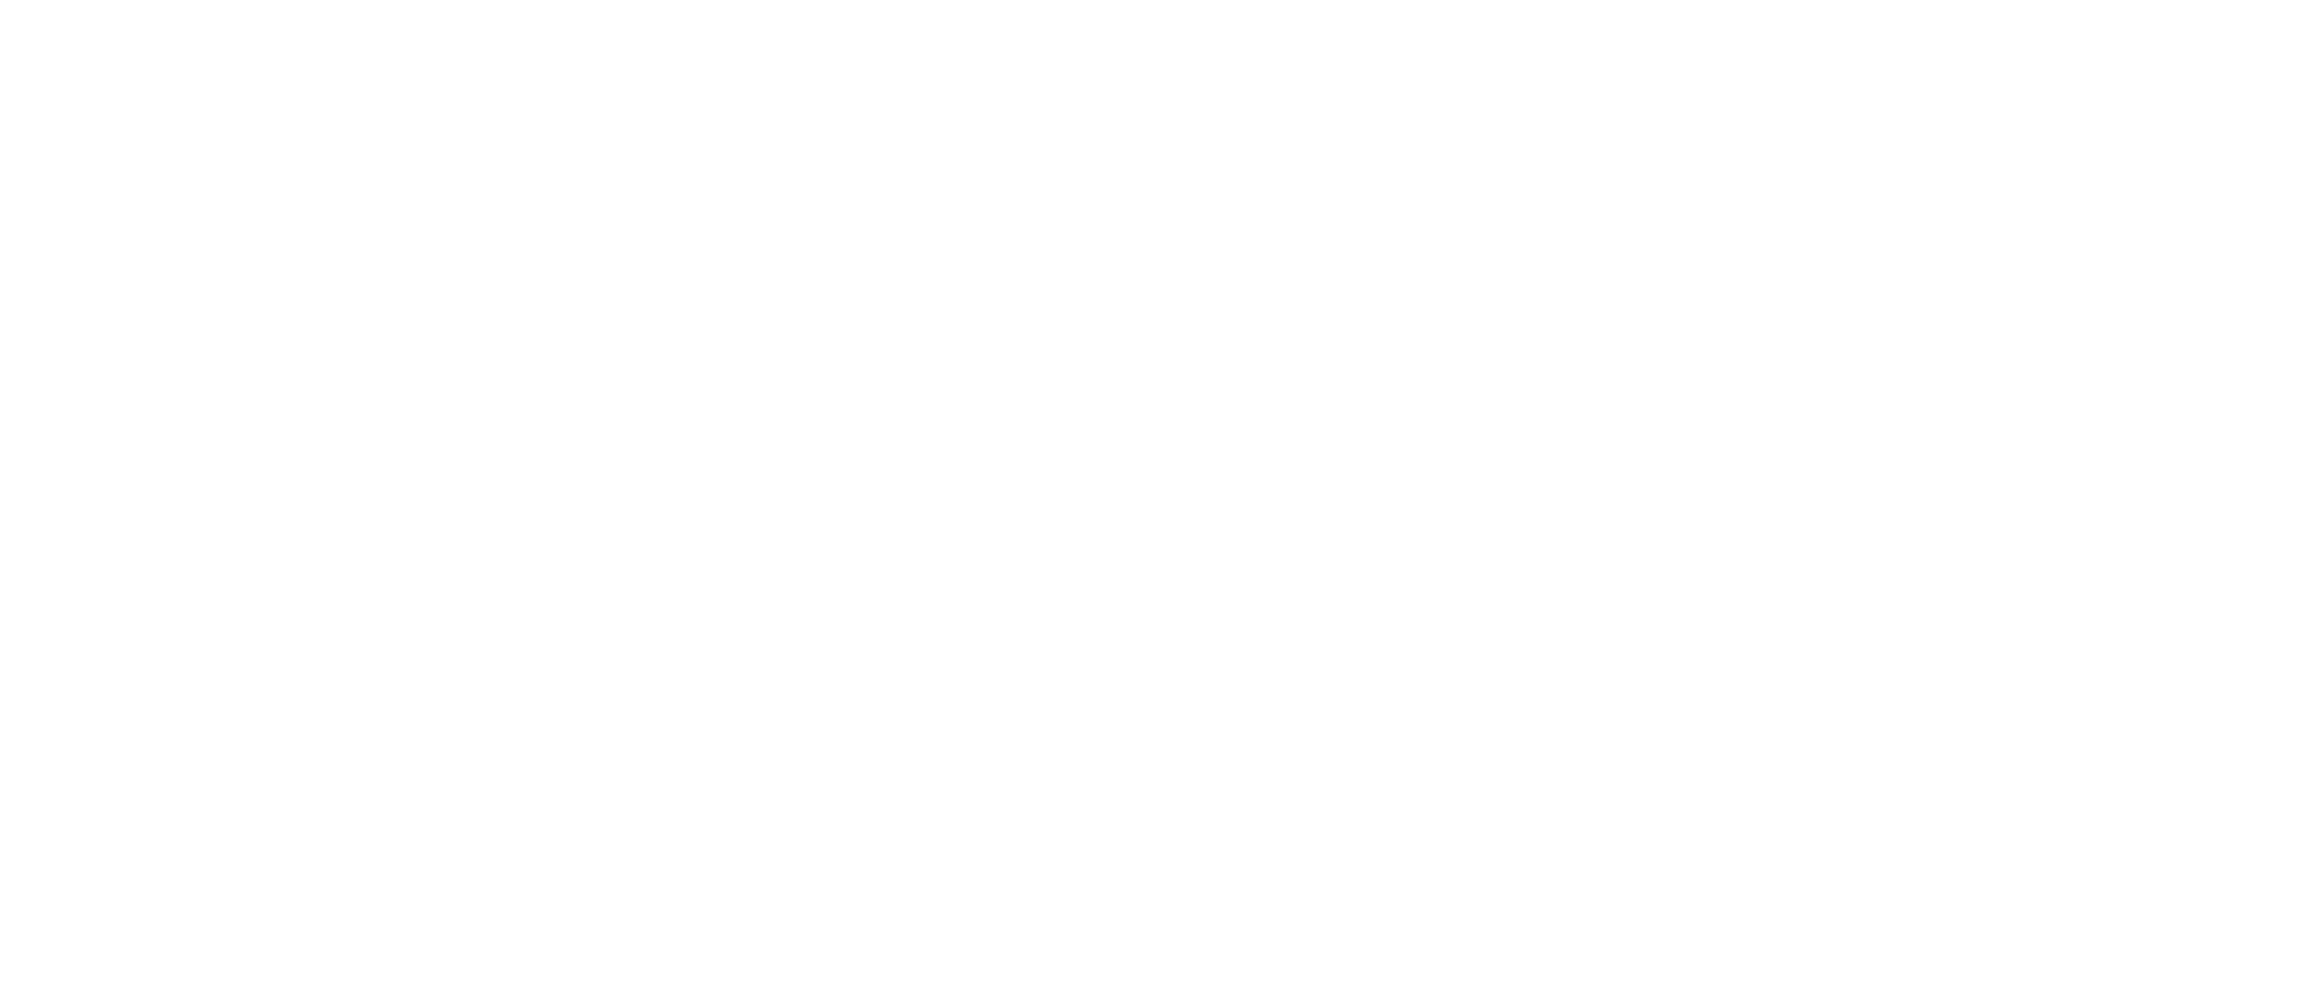 Sesame Street The Nutcracker logo